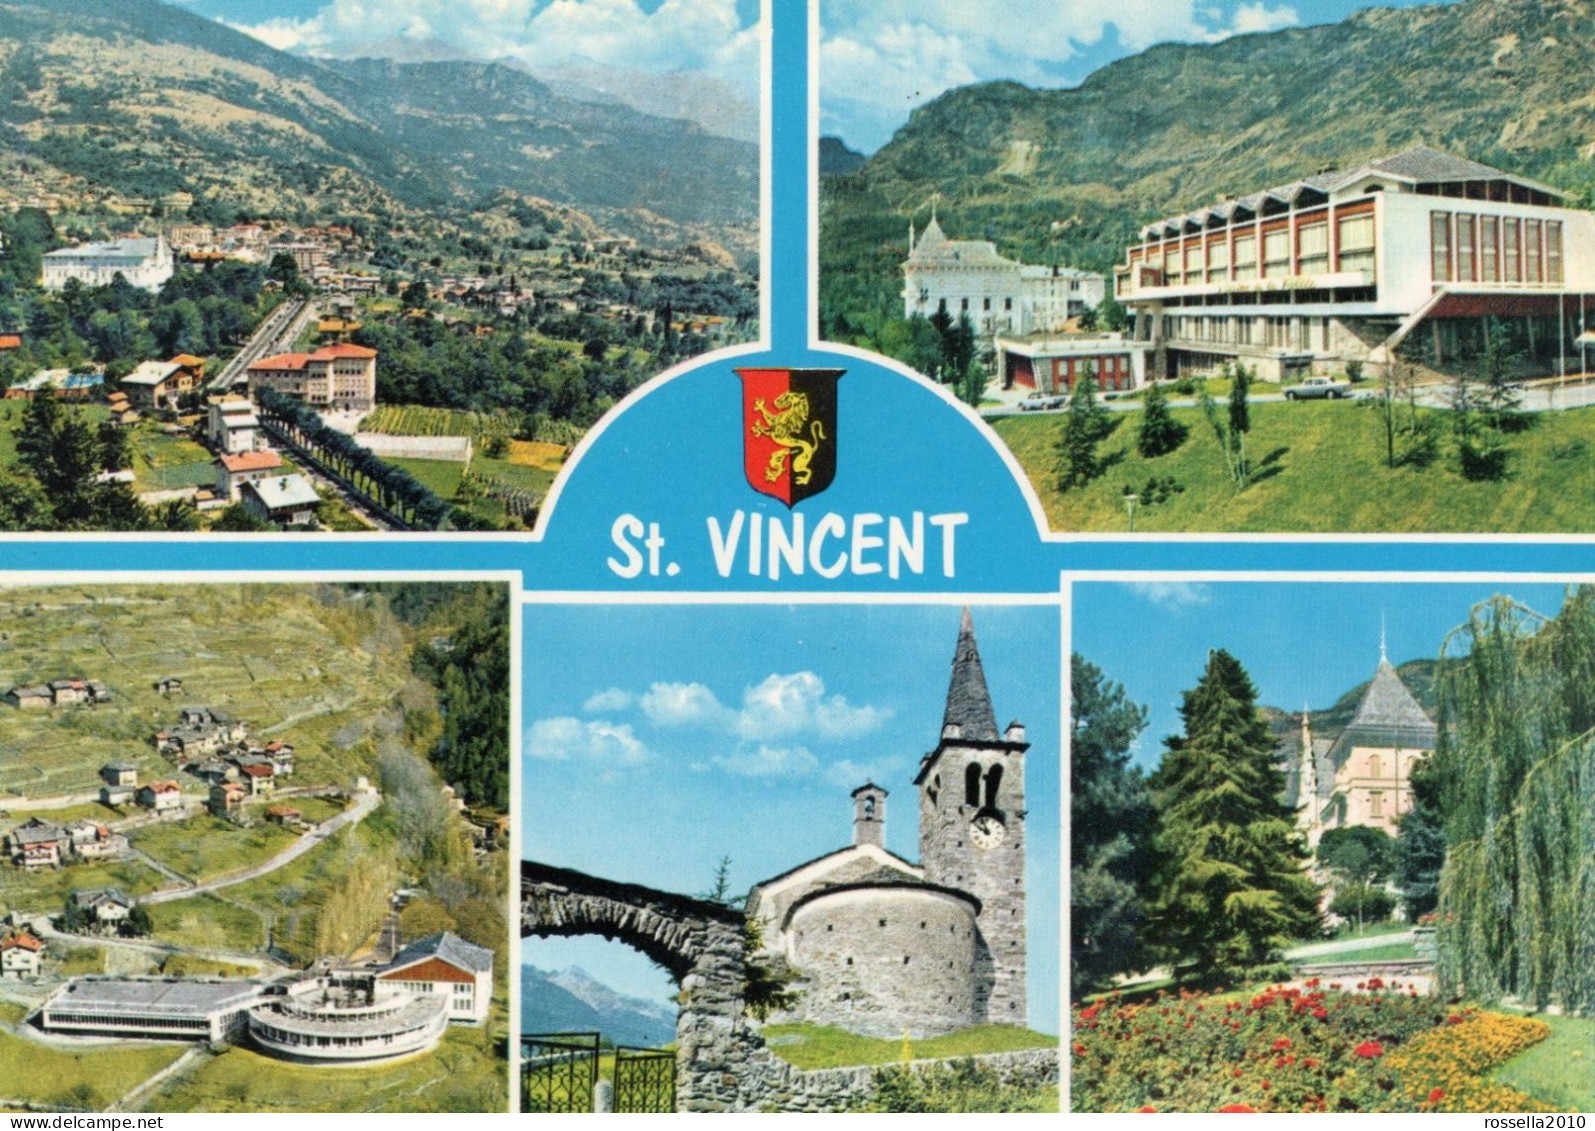 CARTOLINA 1975 ITALIA AOSTA ST. VINCENT SALUTI VEDUTINE Italy Postcard ITALIEN Ansichtskarten - Greetings From...